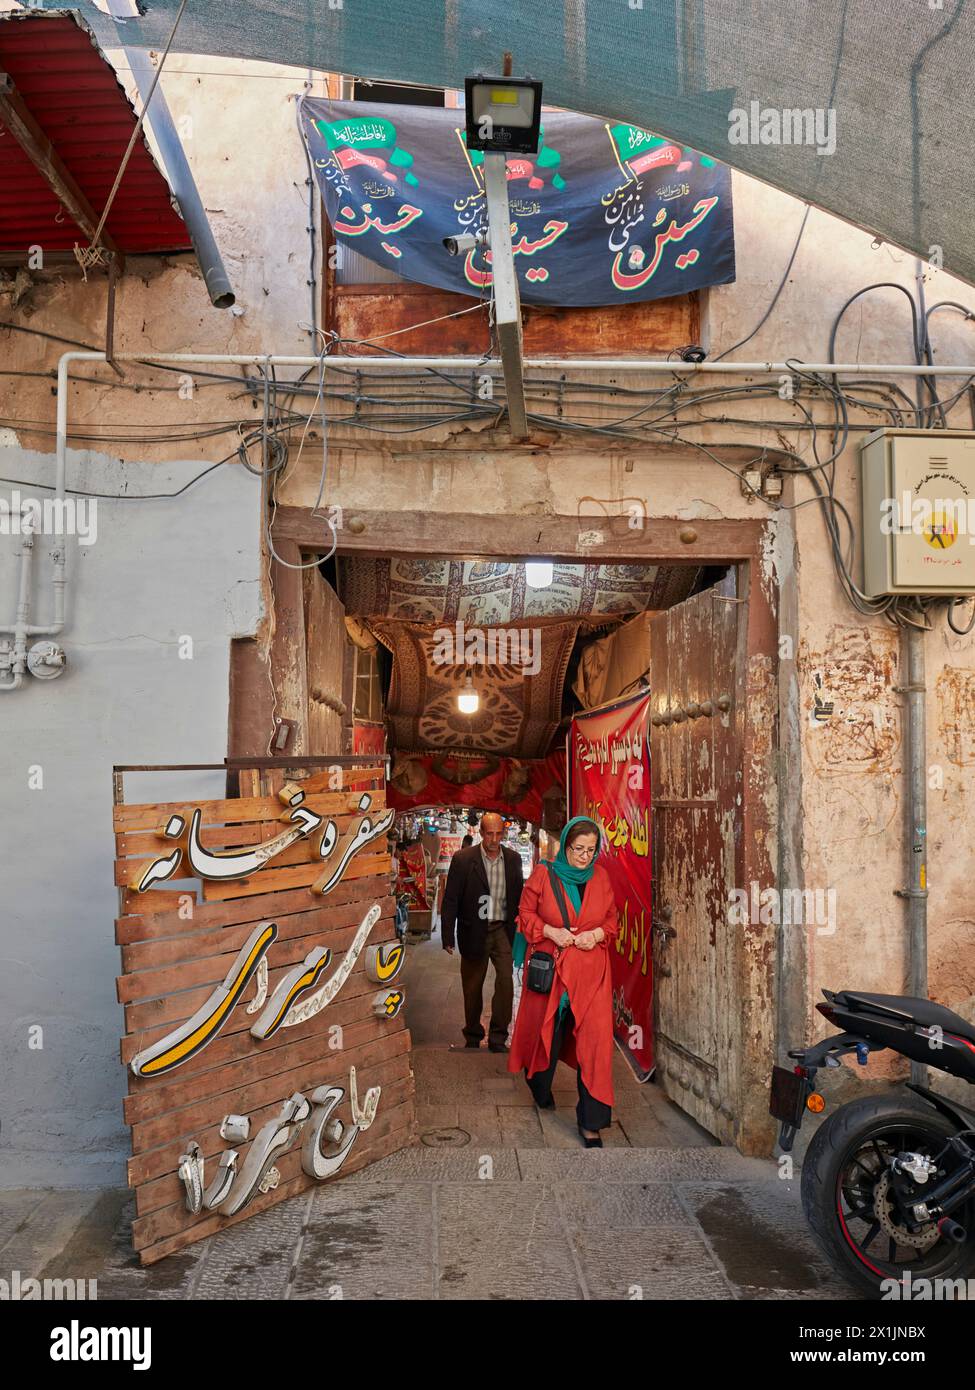 Iranian woman wearing red cloak walk in a narrow doorway in the Grand Bazaar area. Isfahan, Iran. Stock Photo